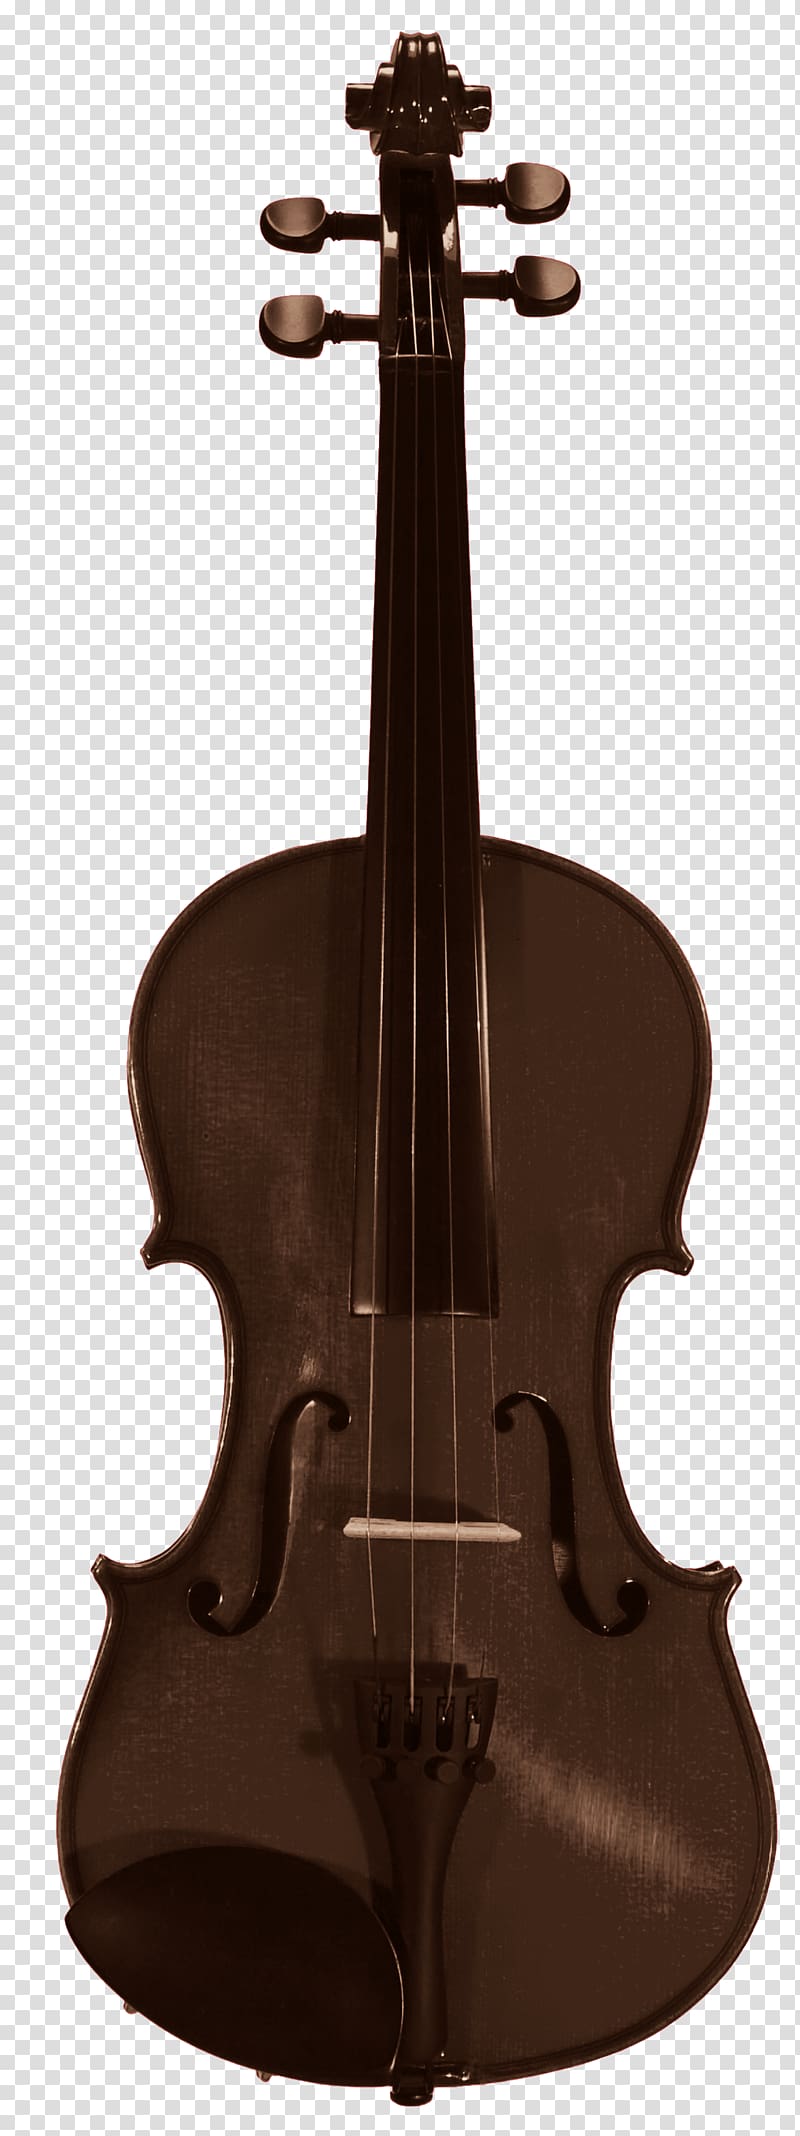 CK Violins Musical instrument Viola, Beautiful brown violin transparent background PNG clipart